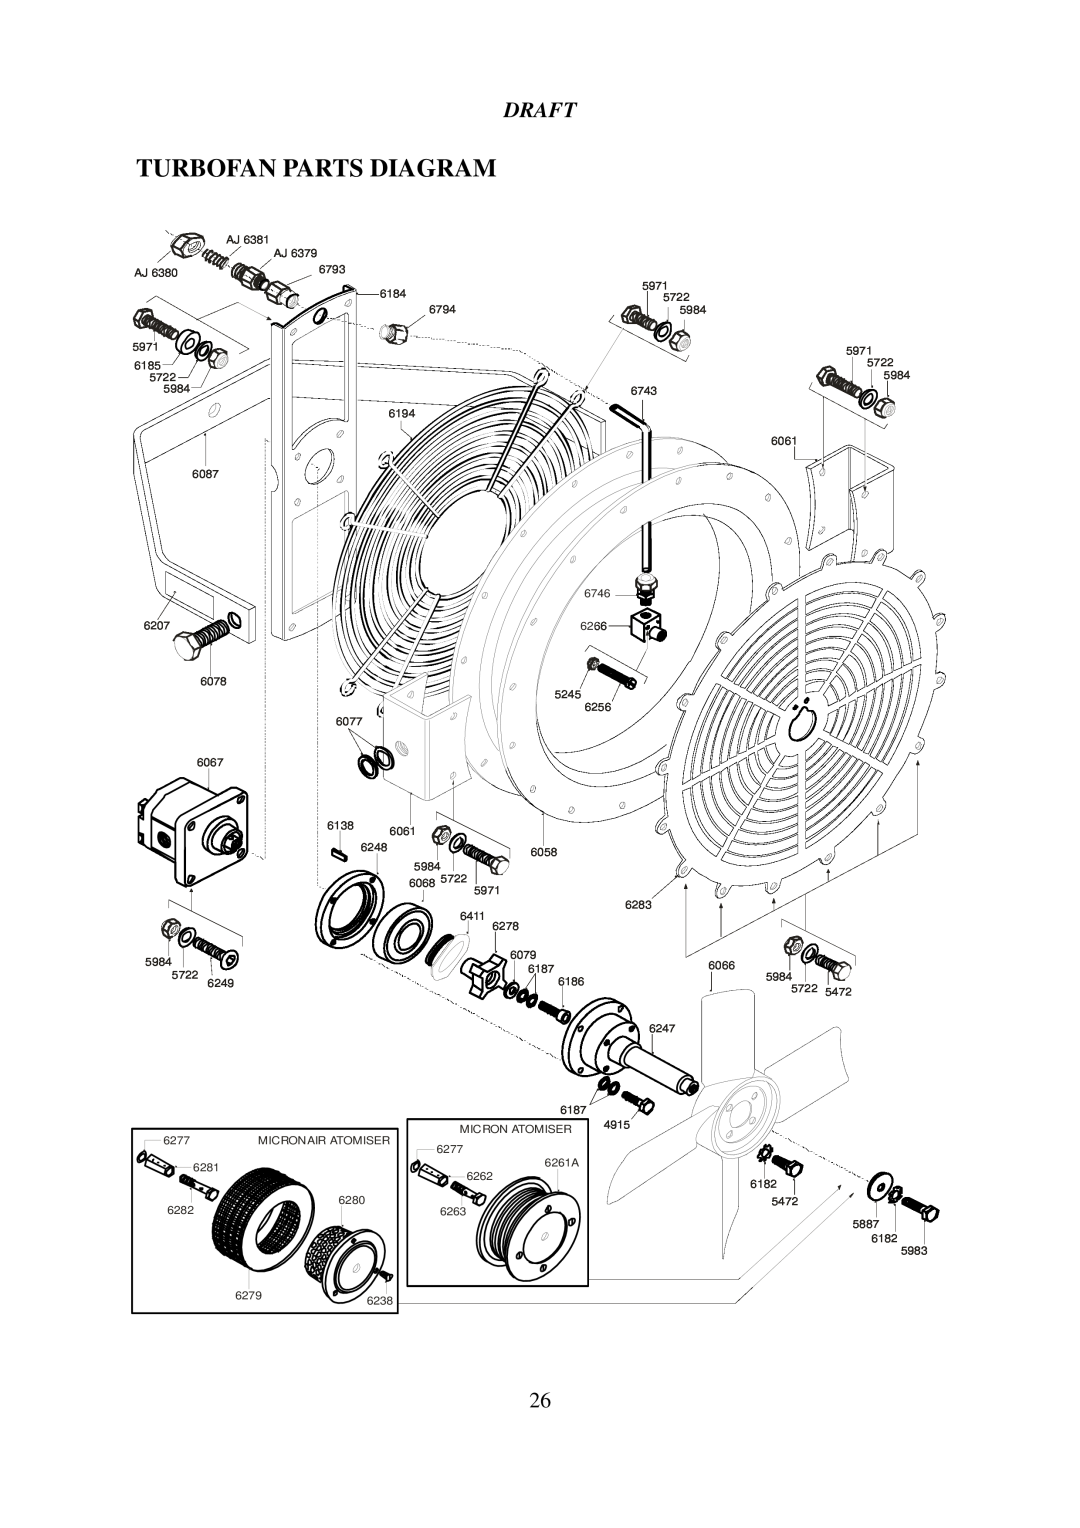 Micron Technology instruction manual Turbofan Parts Diagram, Draft 